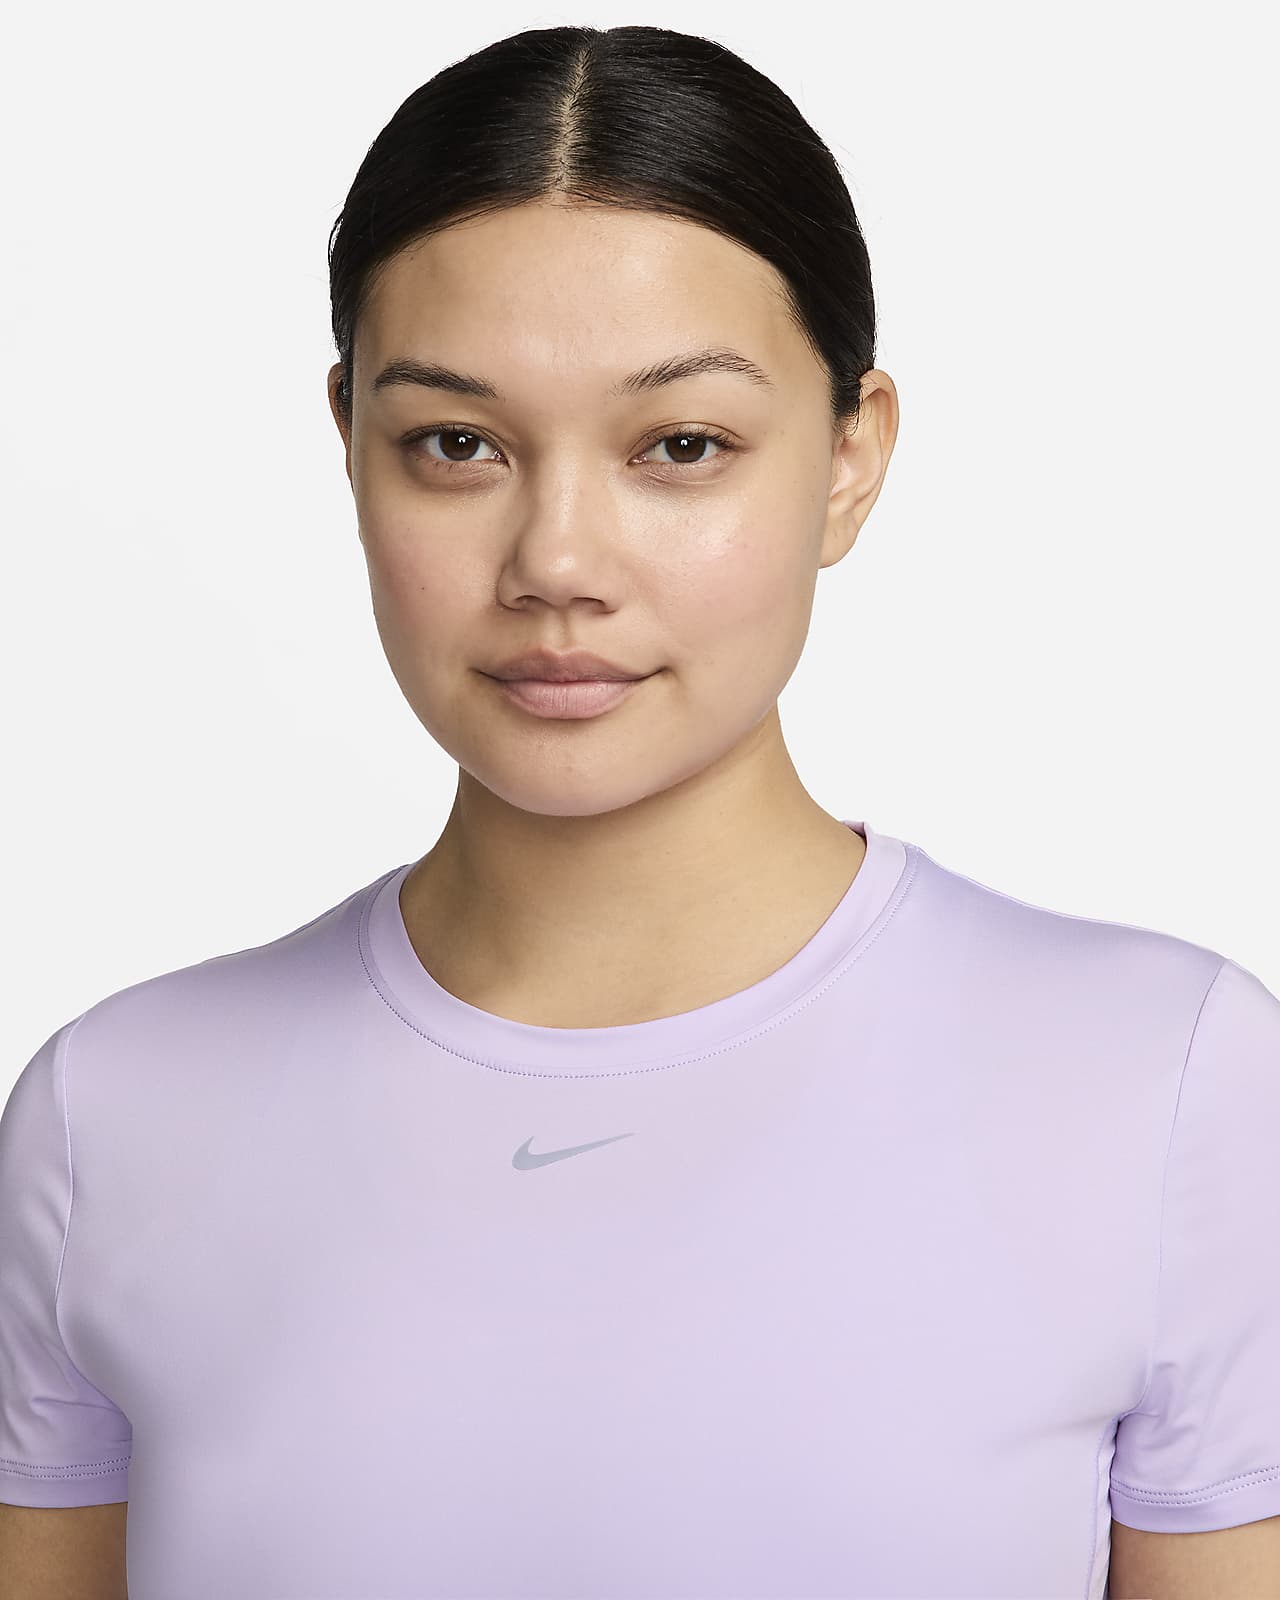 Women's White Tops & T-Shirts. Nike CA